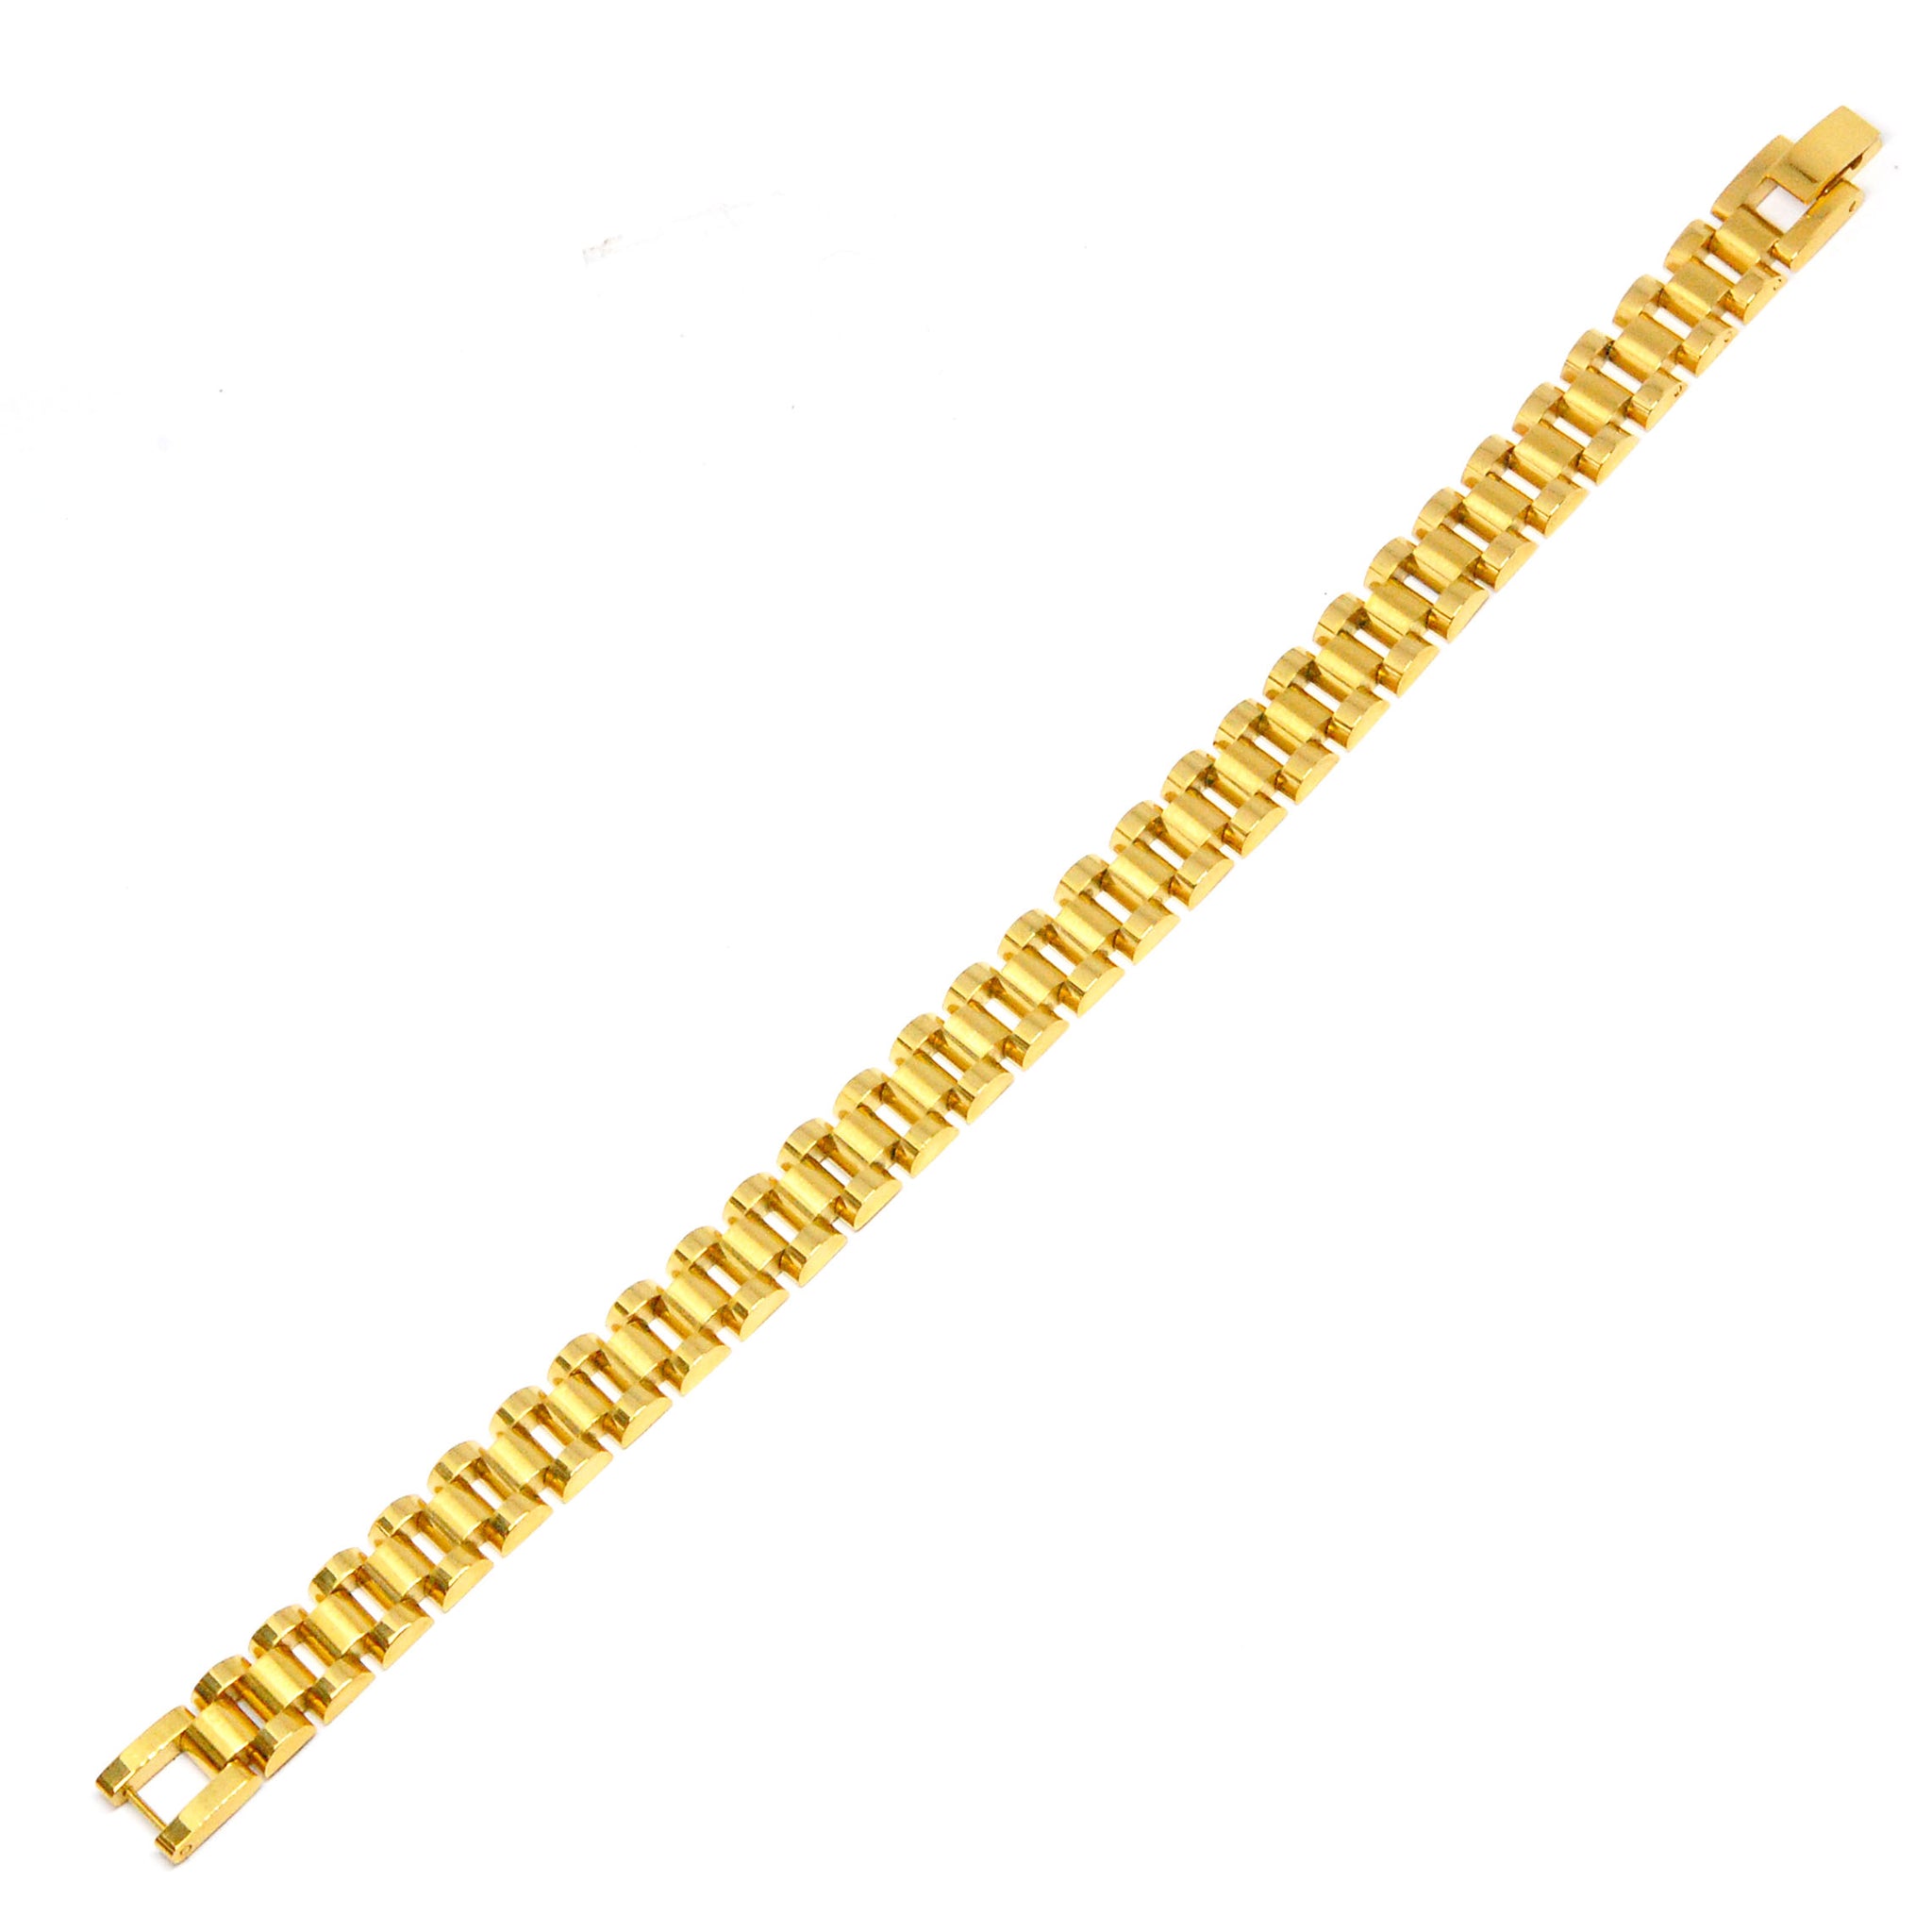 ESBL 7750: All Gold-Plated Rolex Bracelet (10mm)